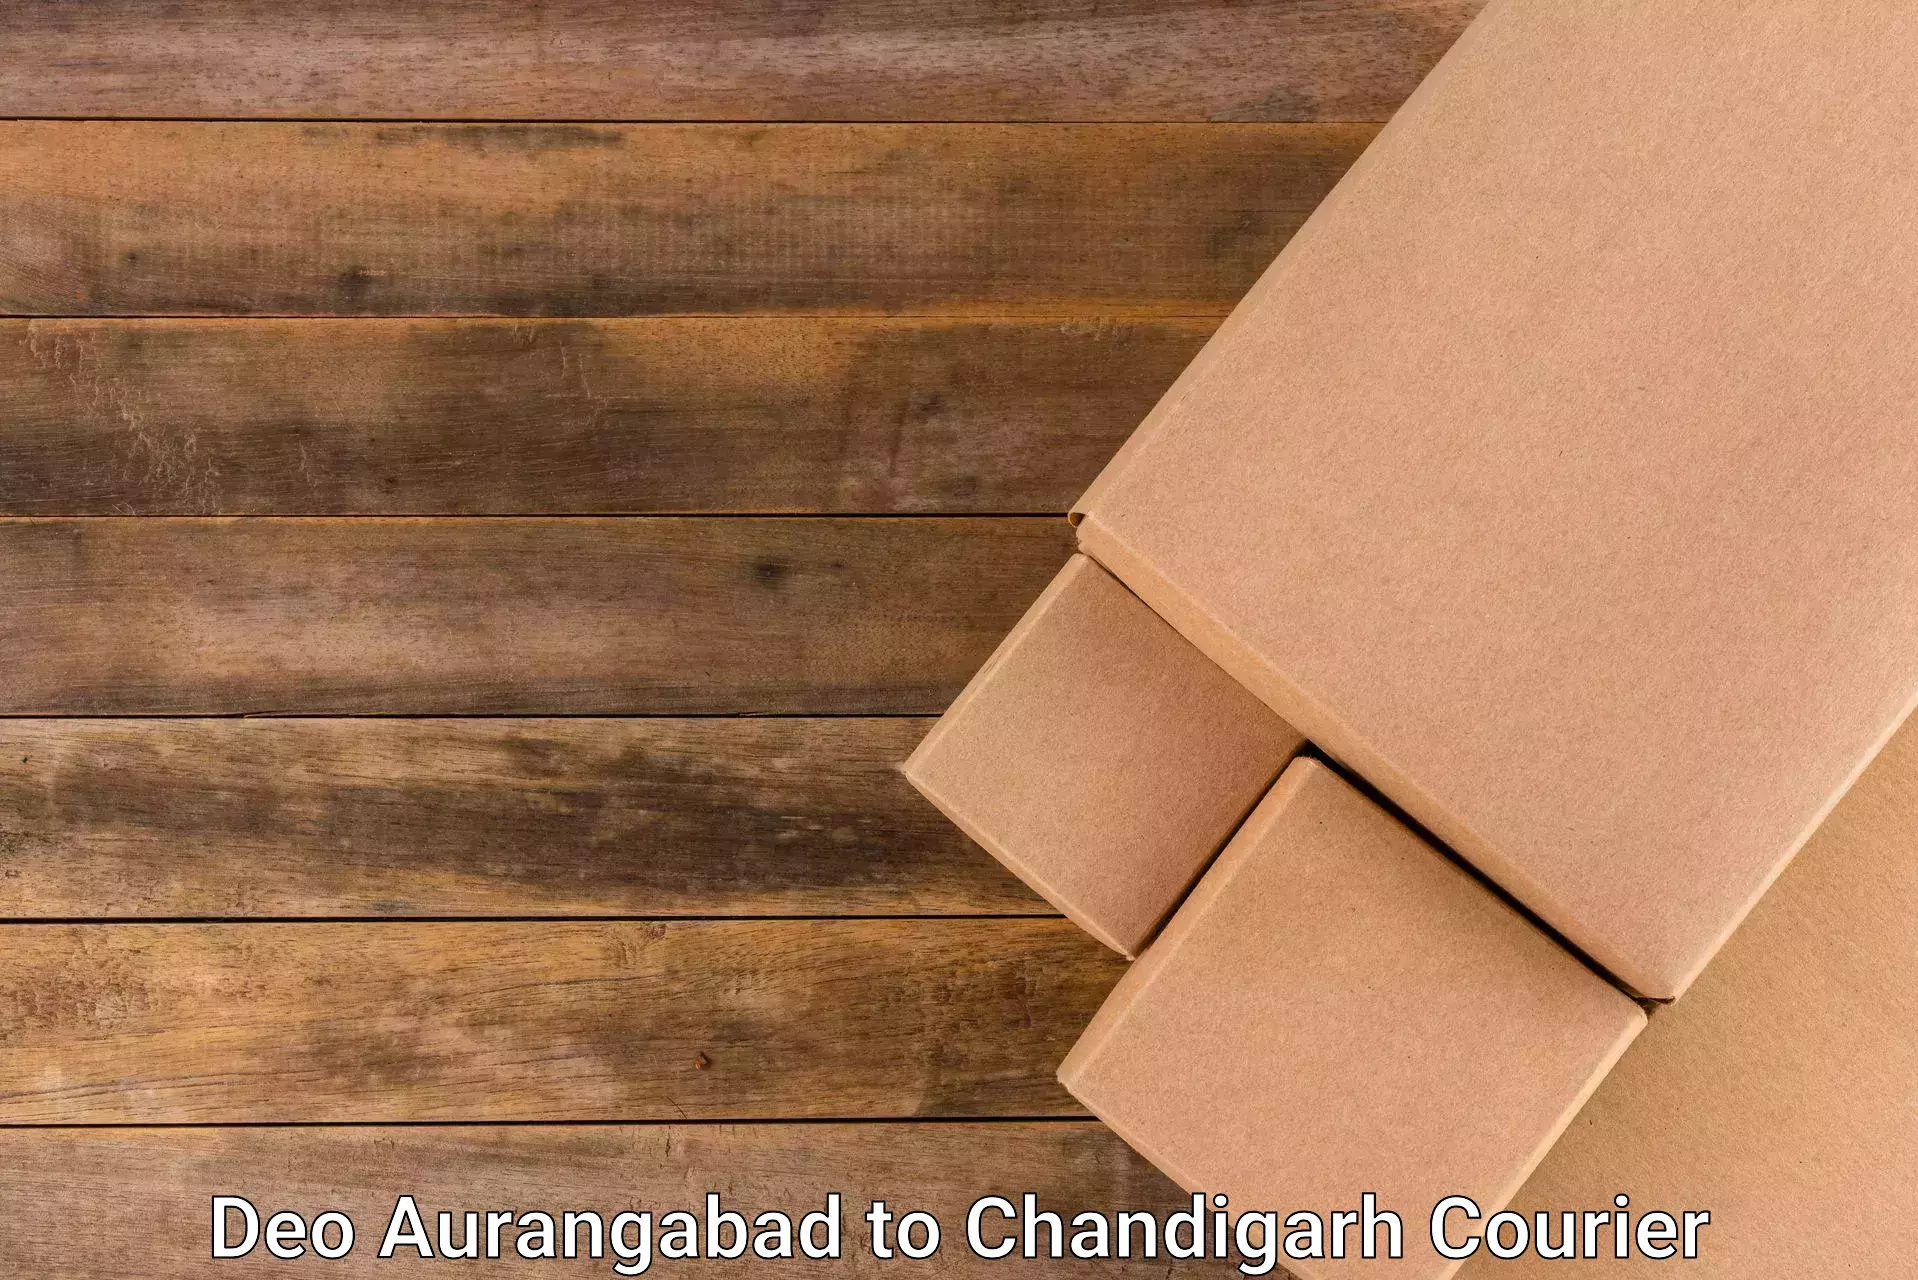 Logistics service provider Deo Aurangabad to Chandigarh